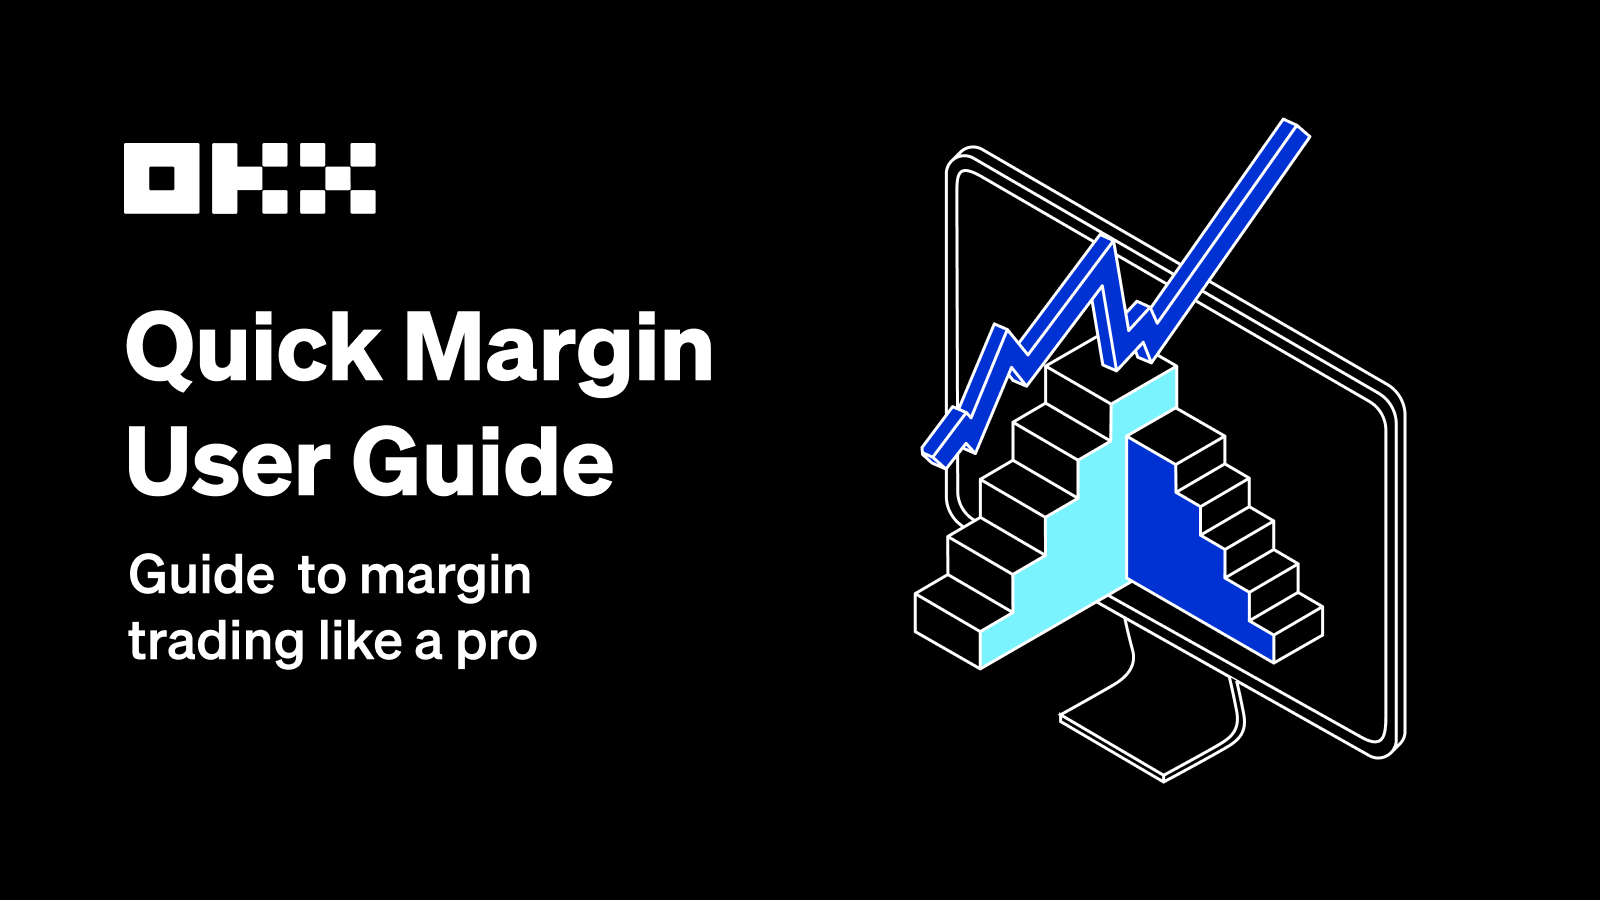 Quick Margin 101: Margin trading made simple